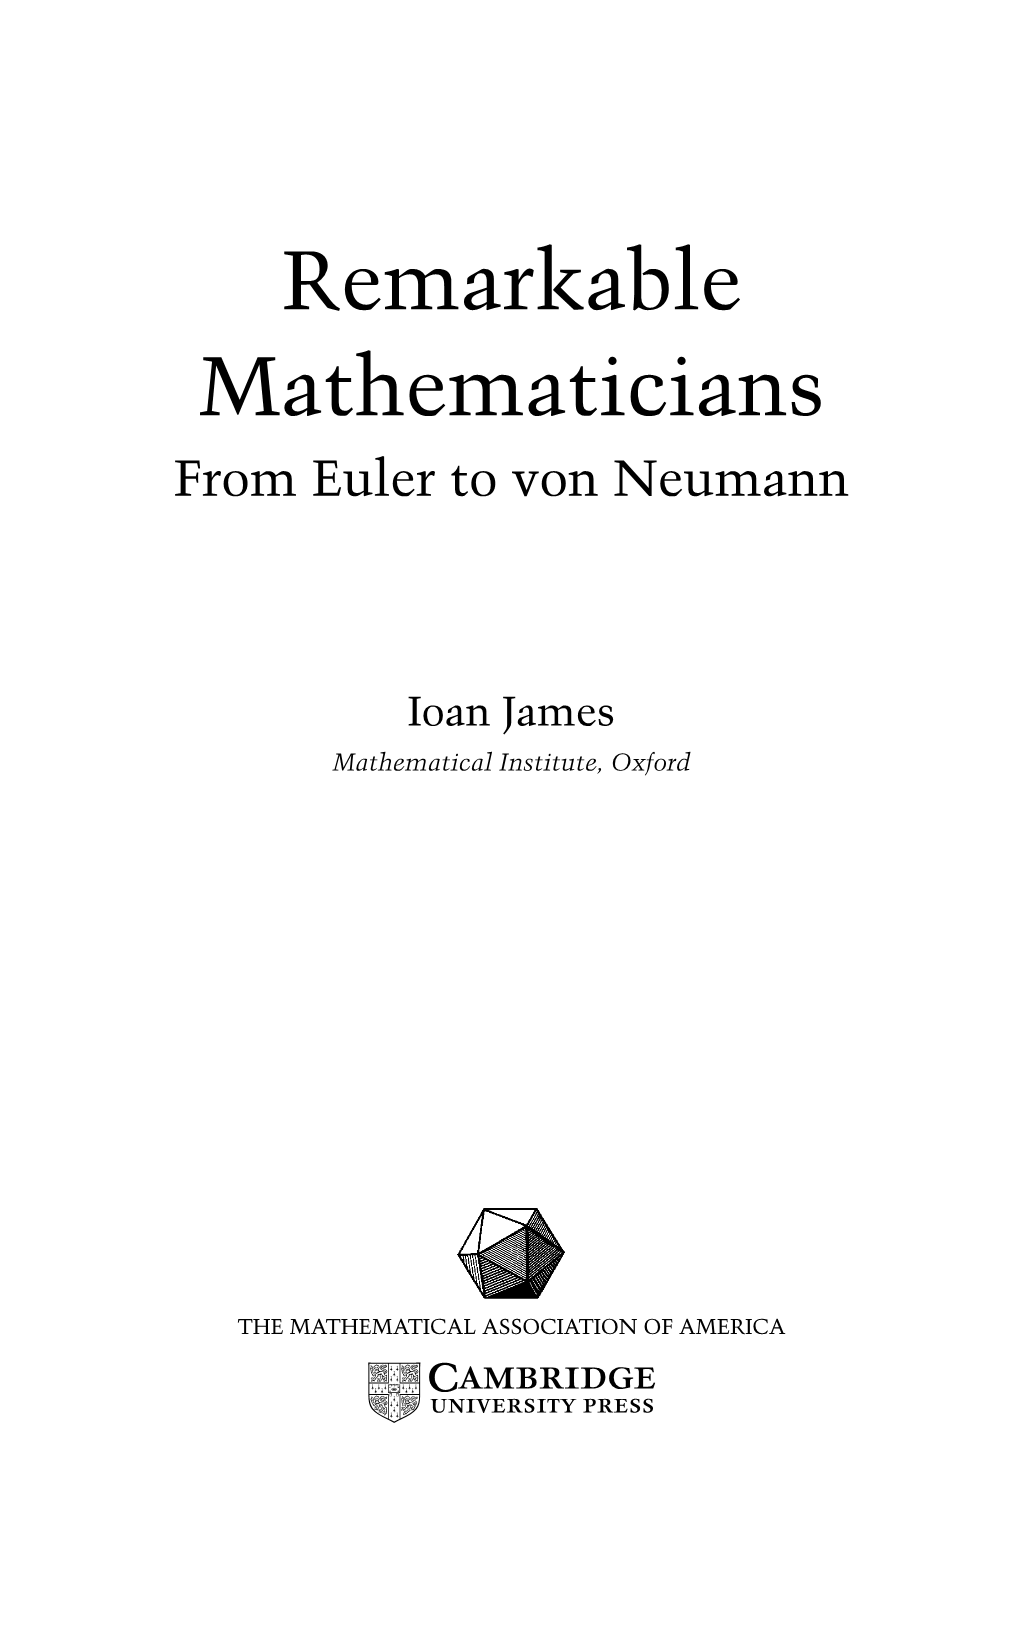 Remarkable Mathematicians from Euler to Von Neumann